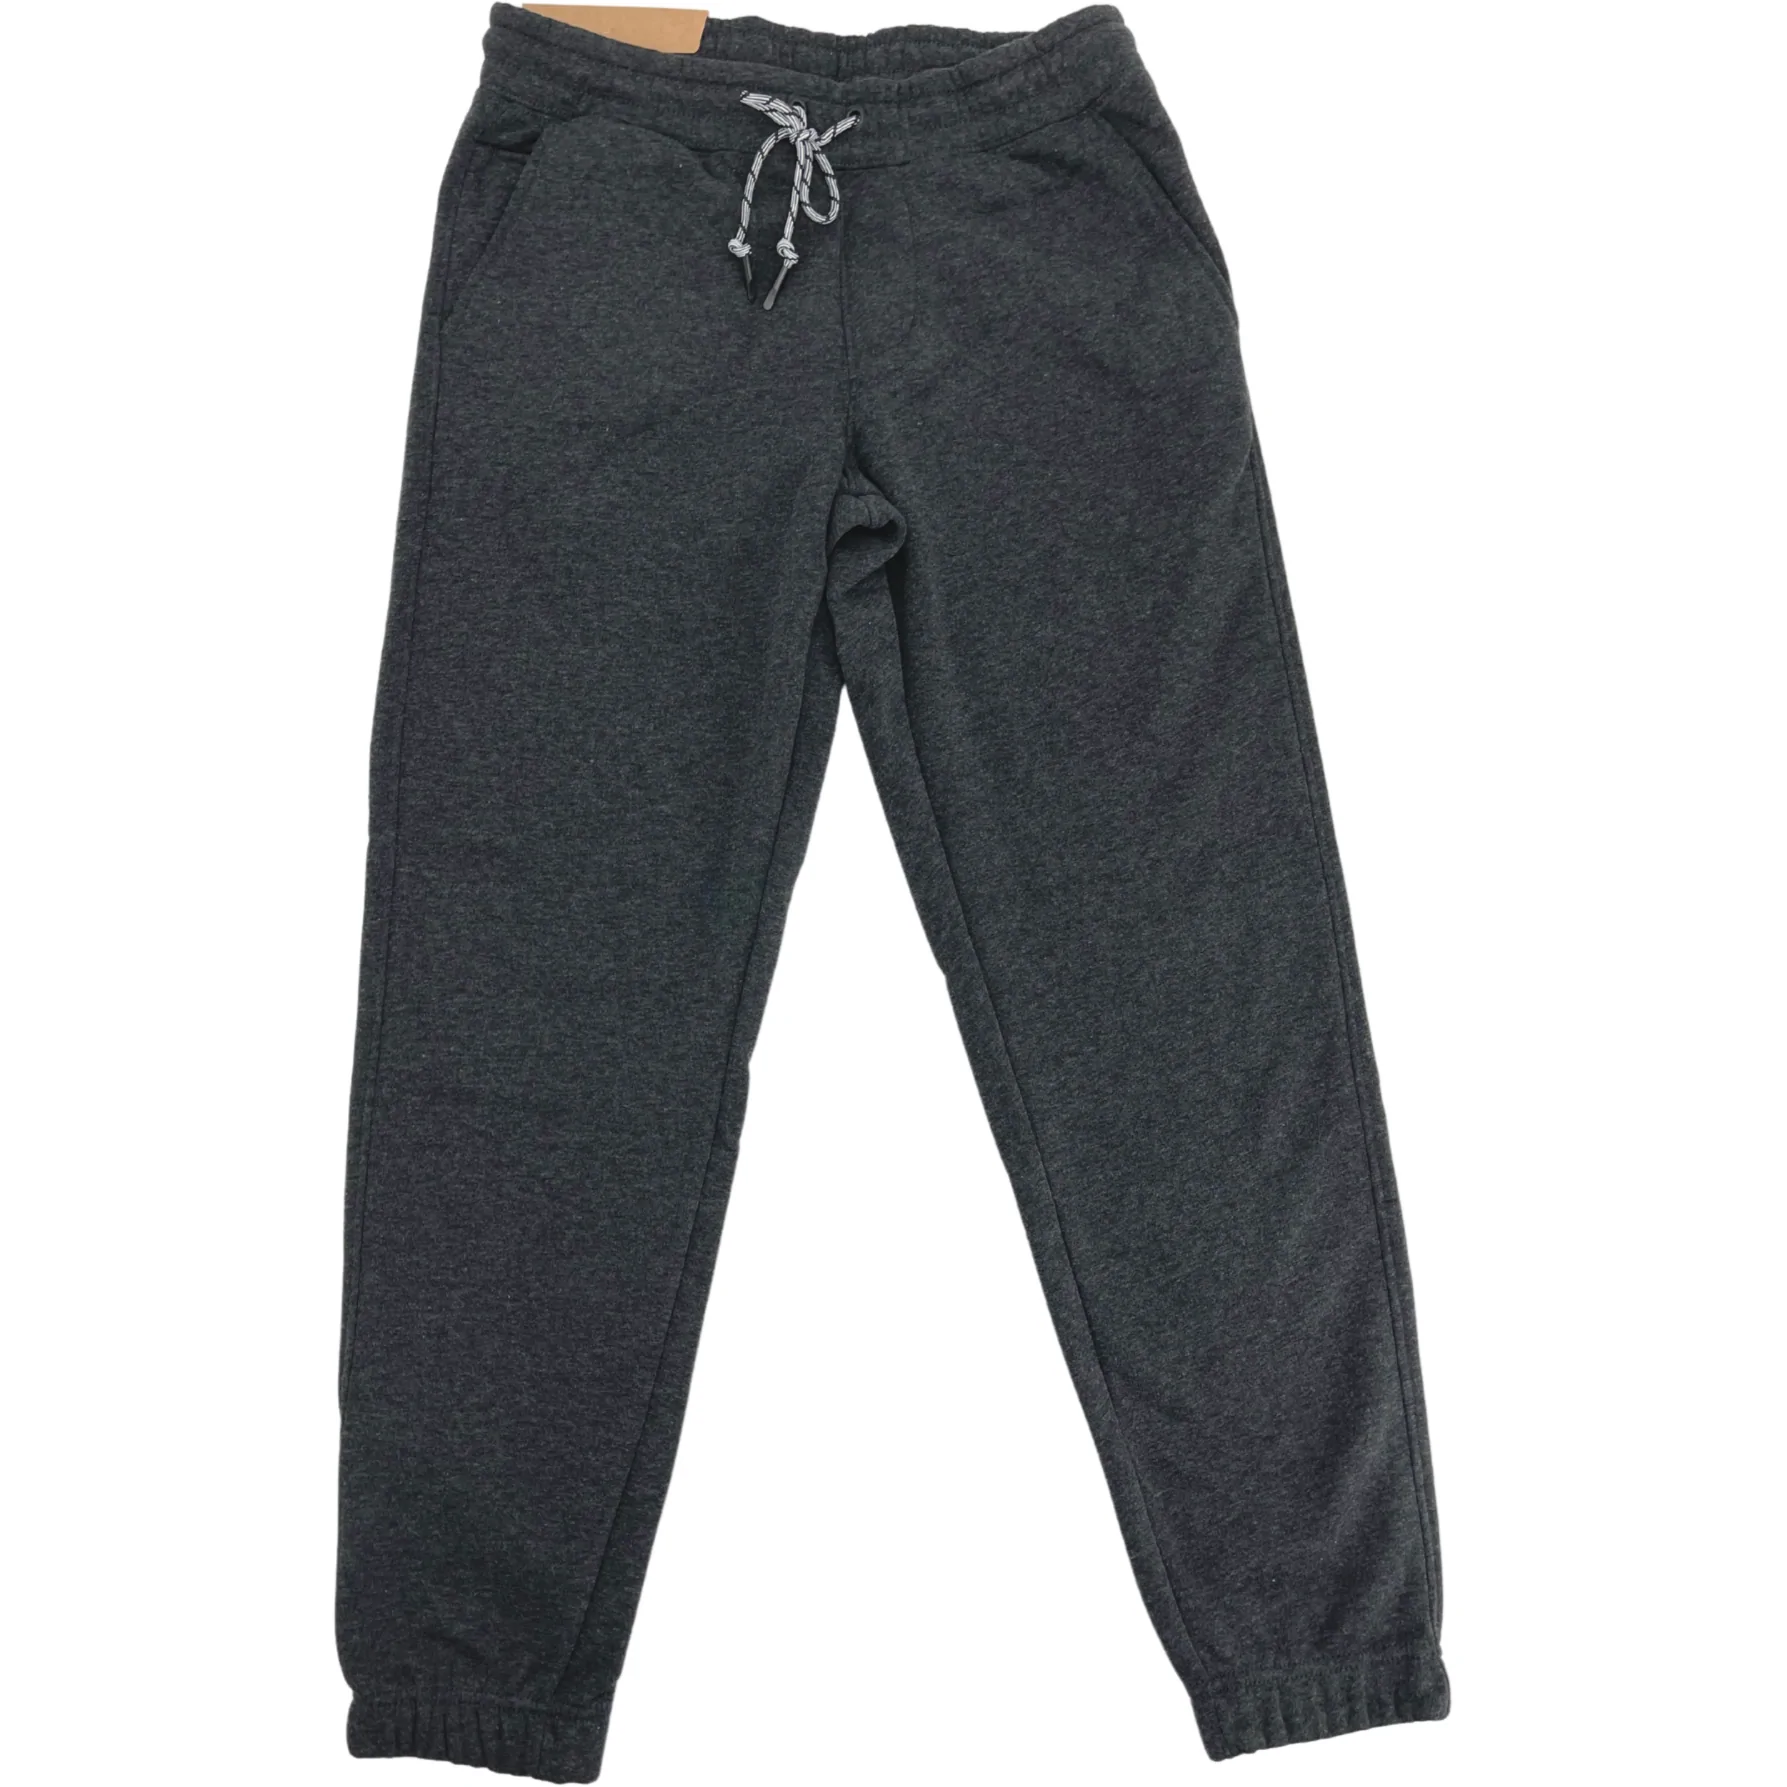 Weatherproof Men’s Sweatpants / Rimrock Jogger / Fleece Lined Pants ...